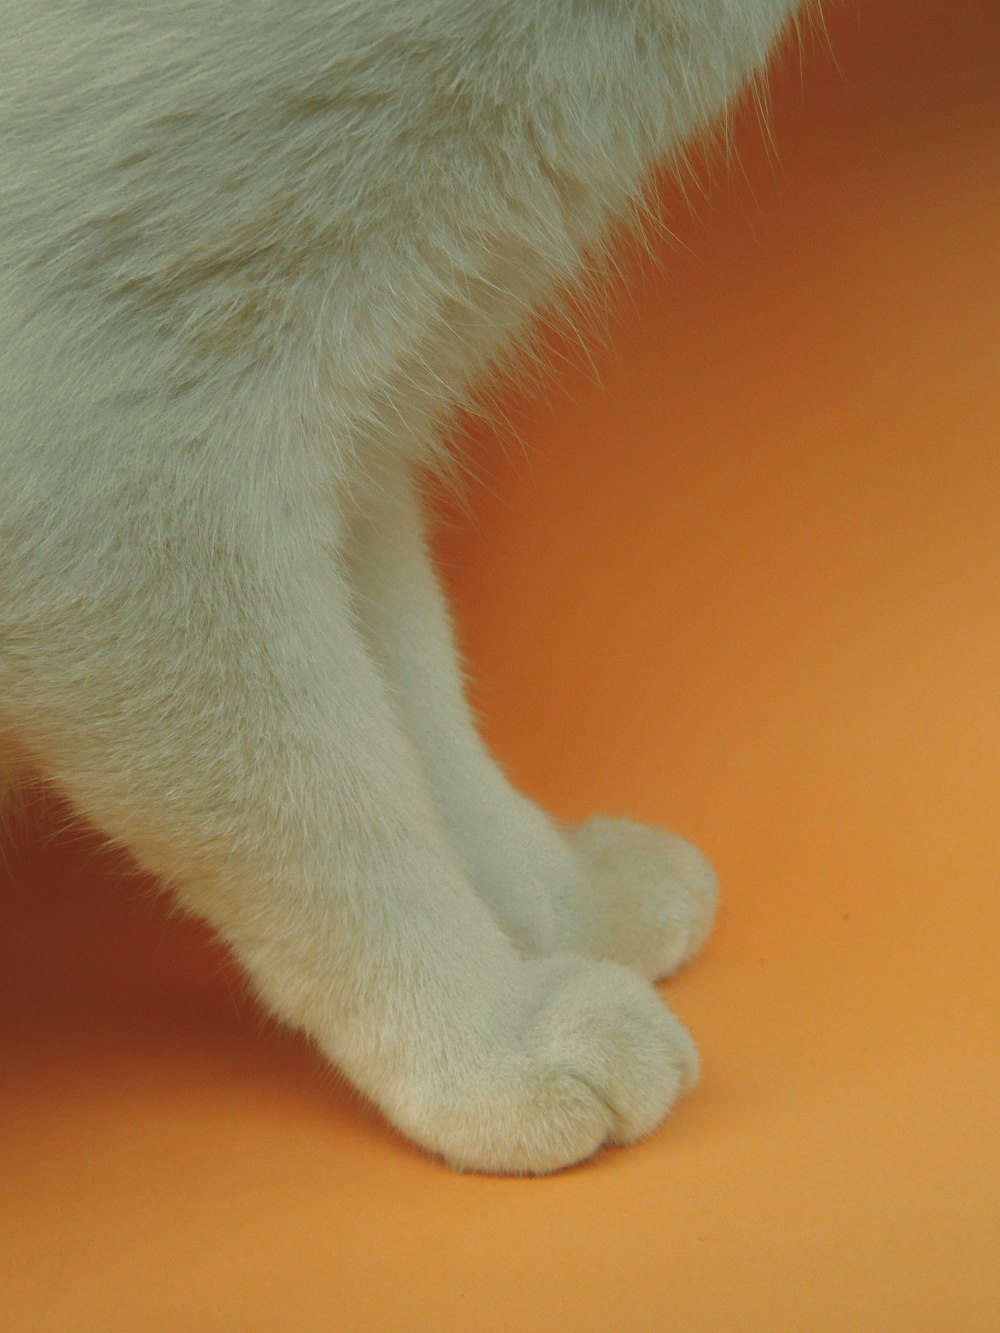 white fur cat on orange textile